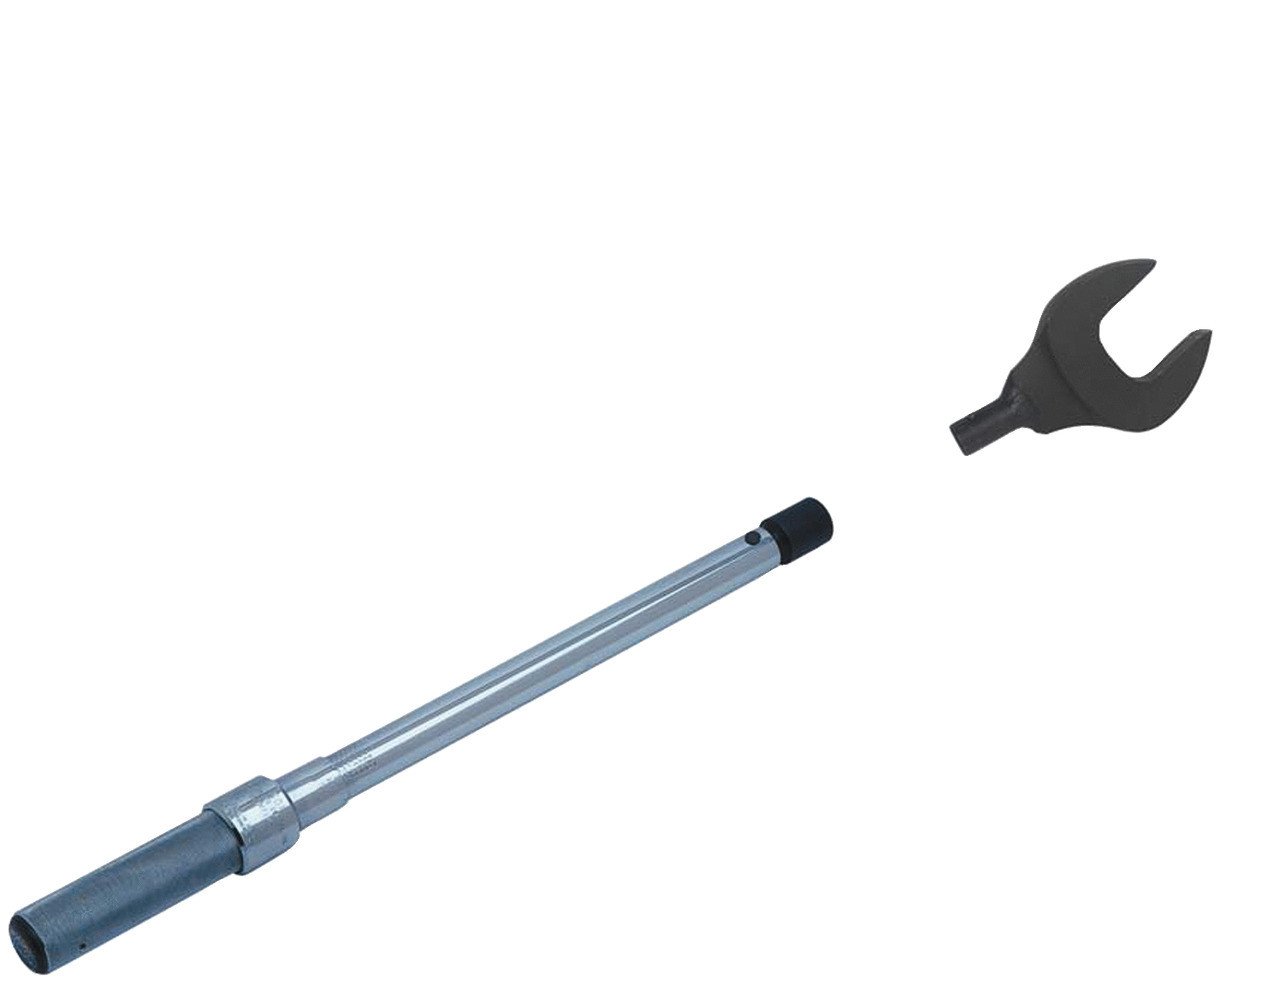 CSP6N Small Capacity Interchangeable-head Preset Torque Wrench